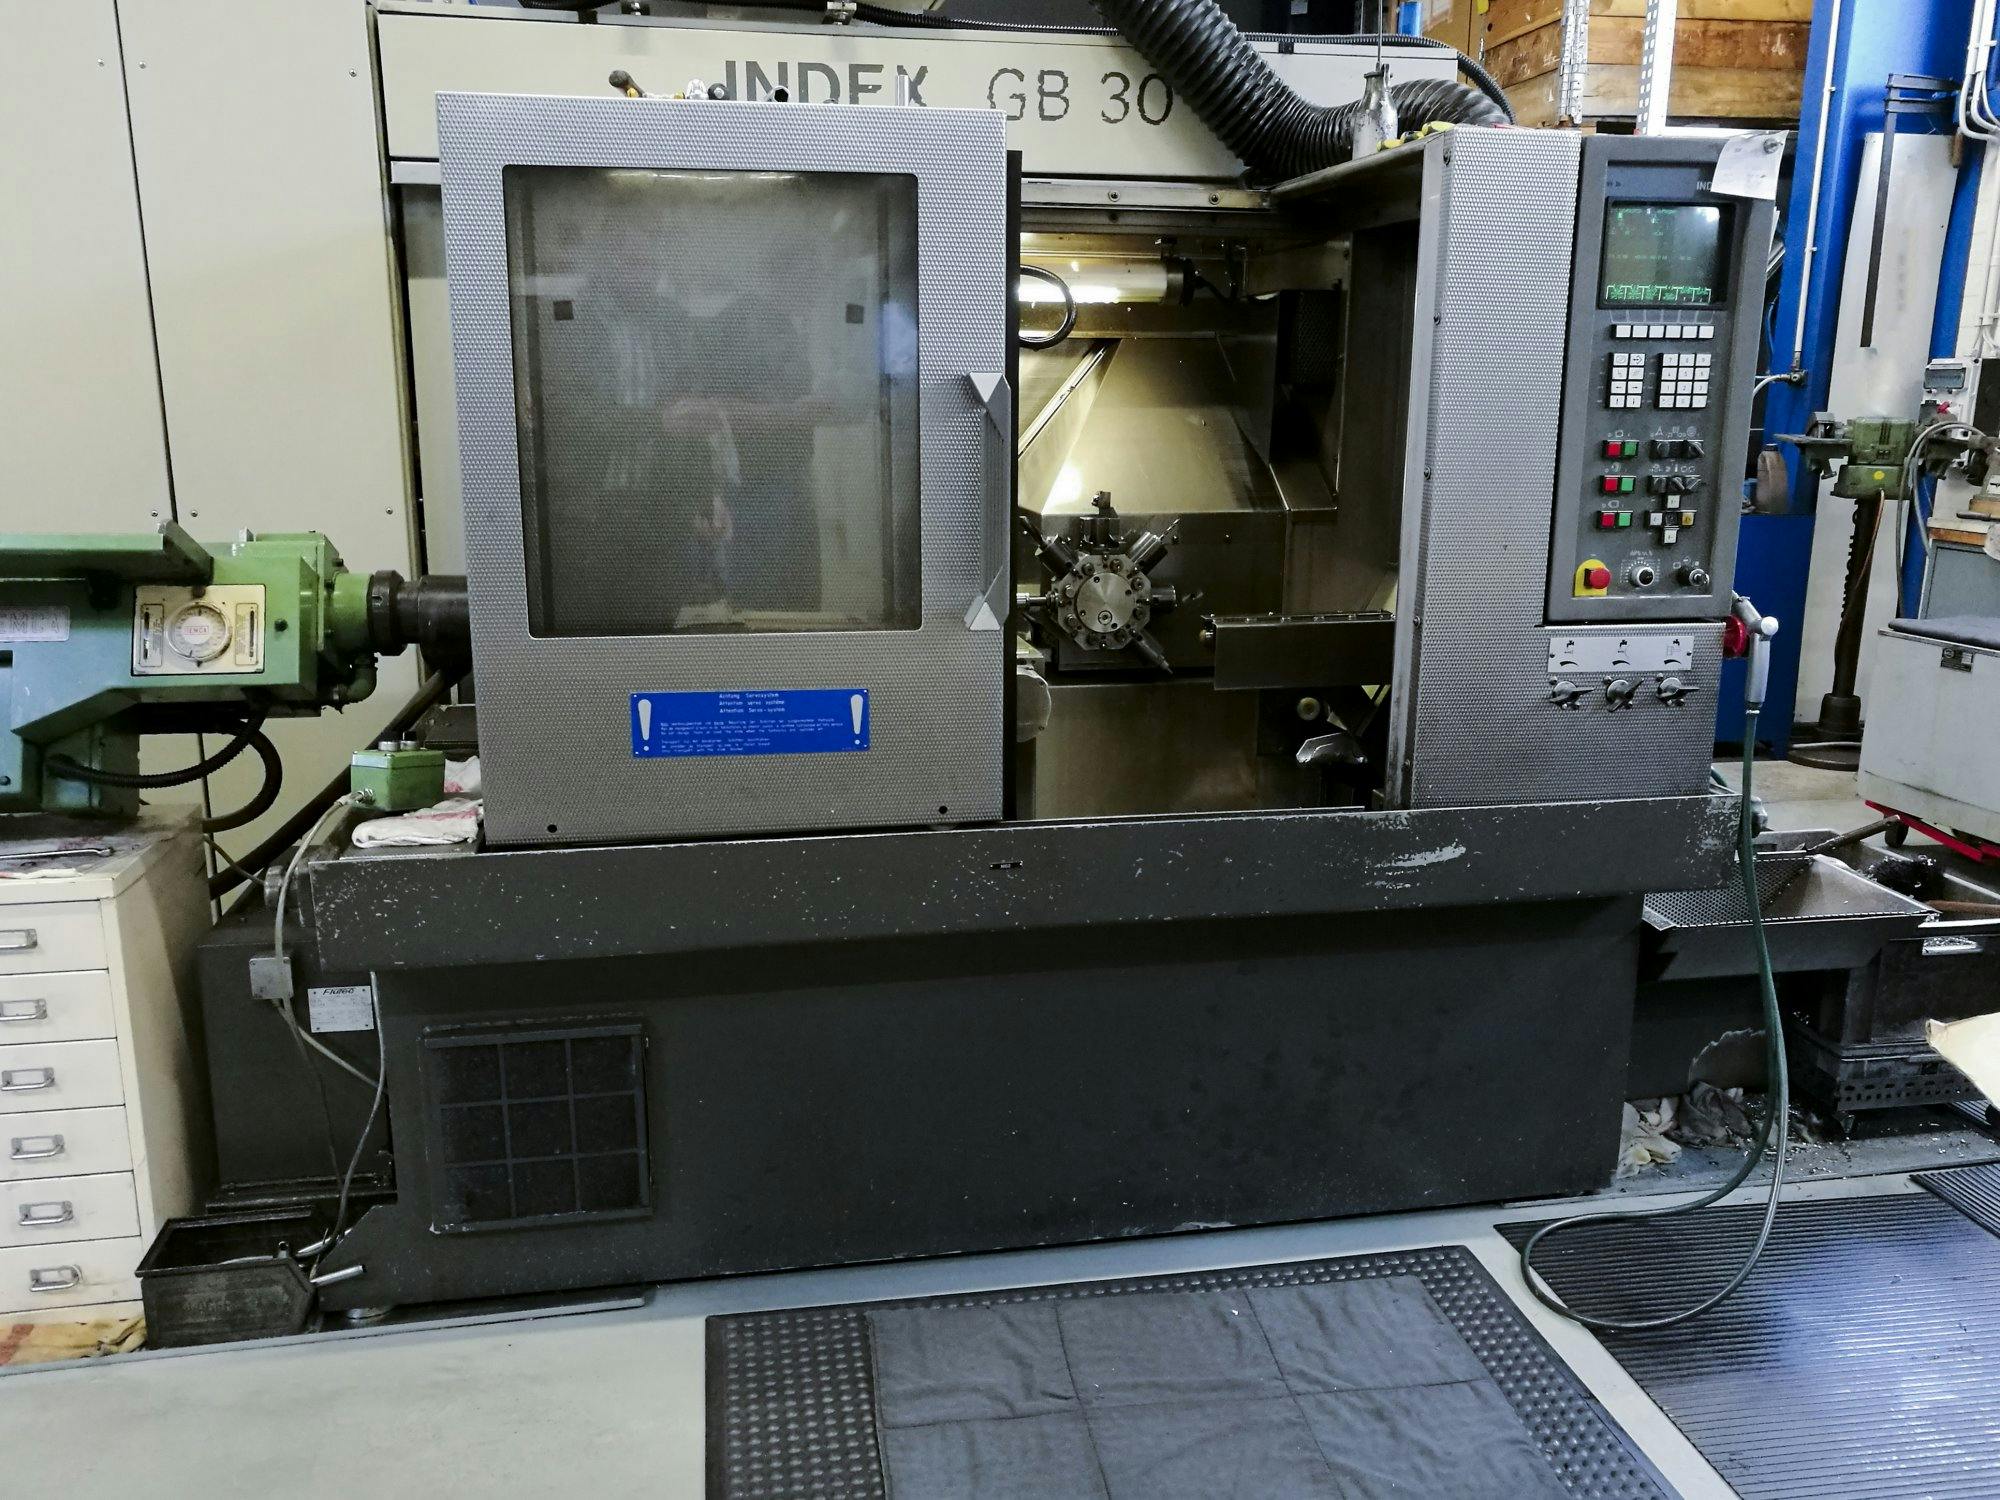 Front view of Index GB 30 machine